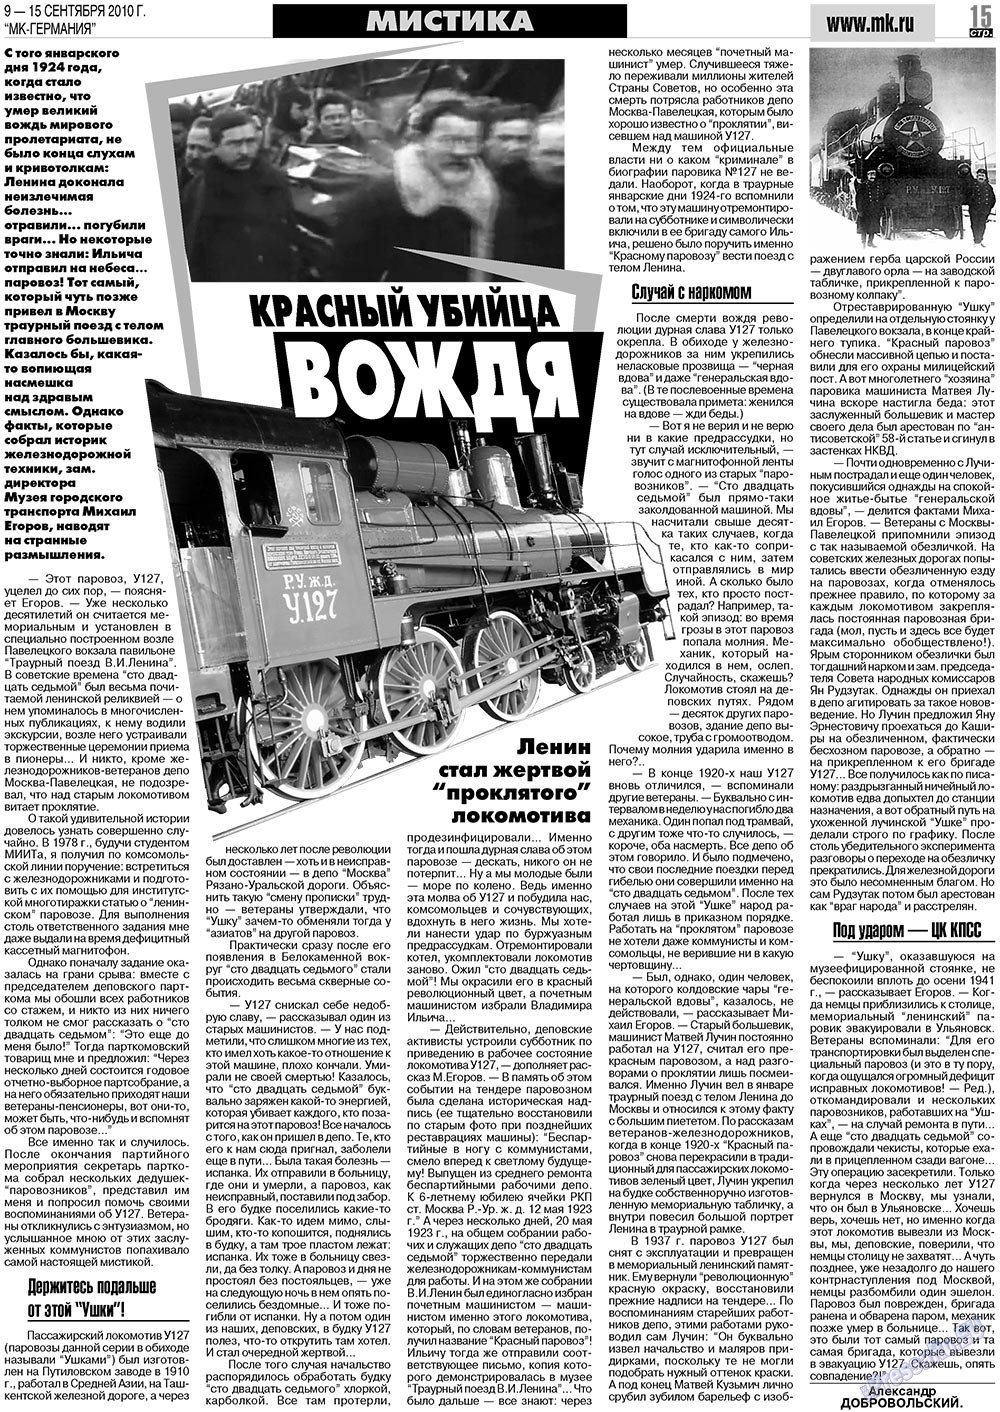 МК-Германия, газета. 2010 №37 стр.15